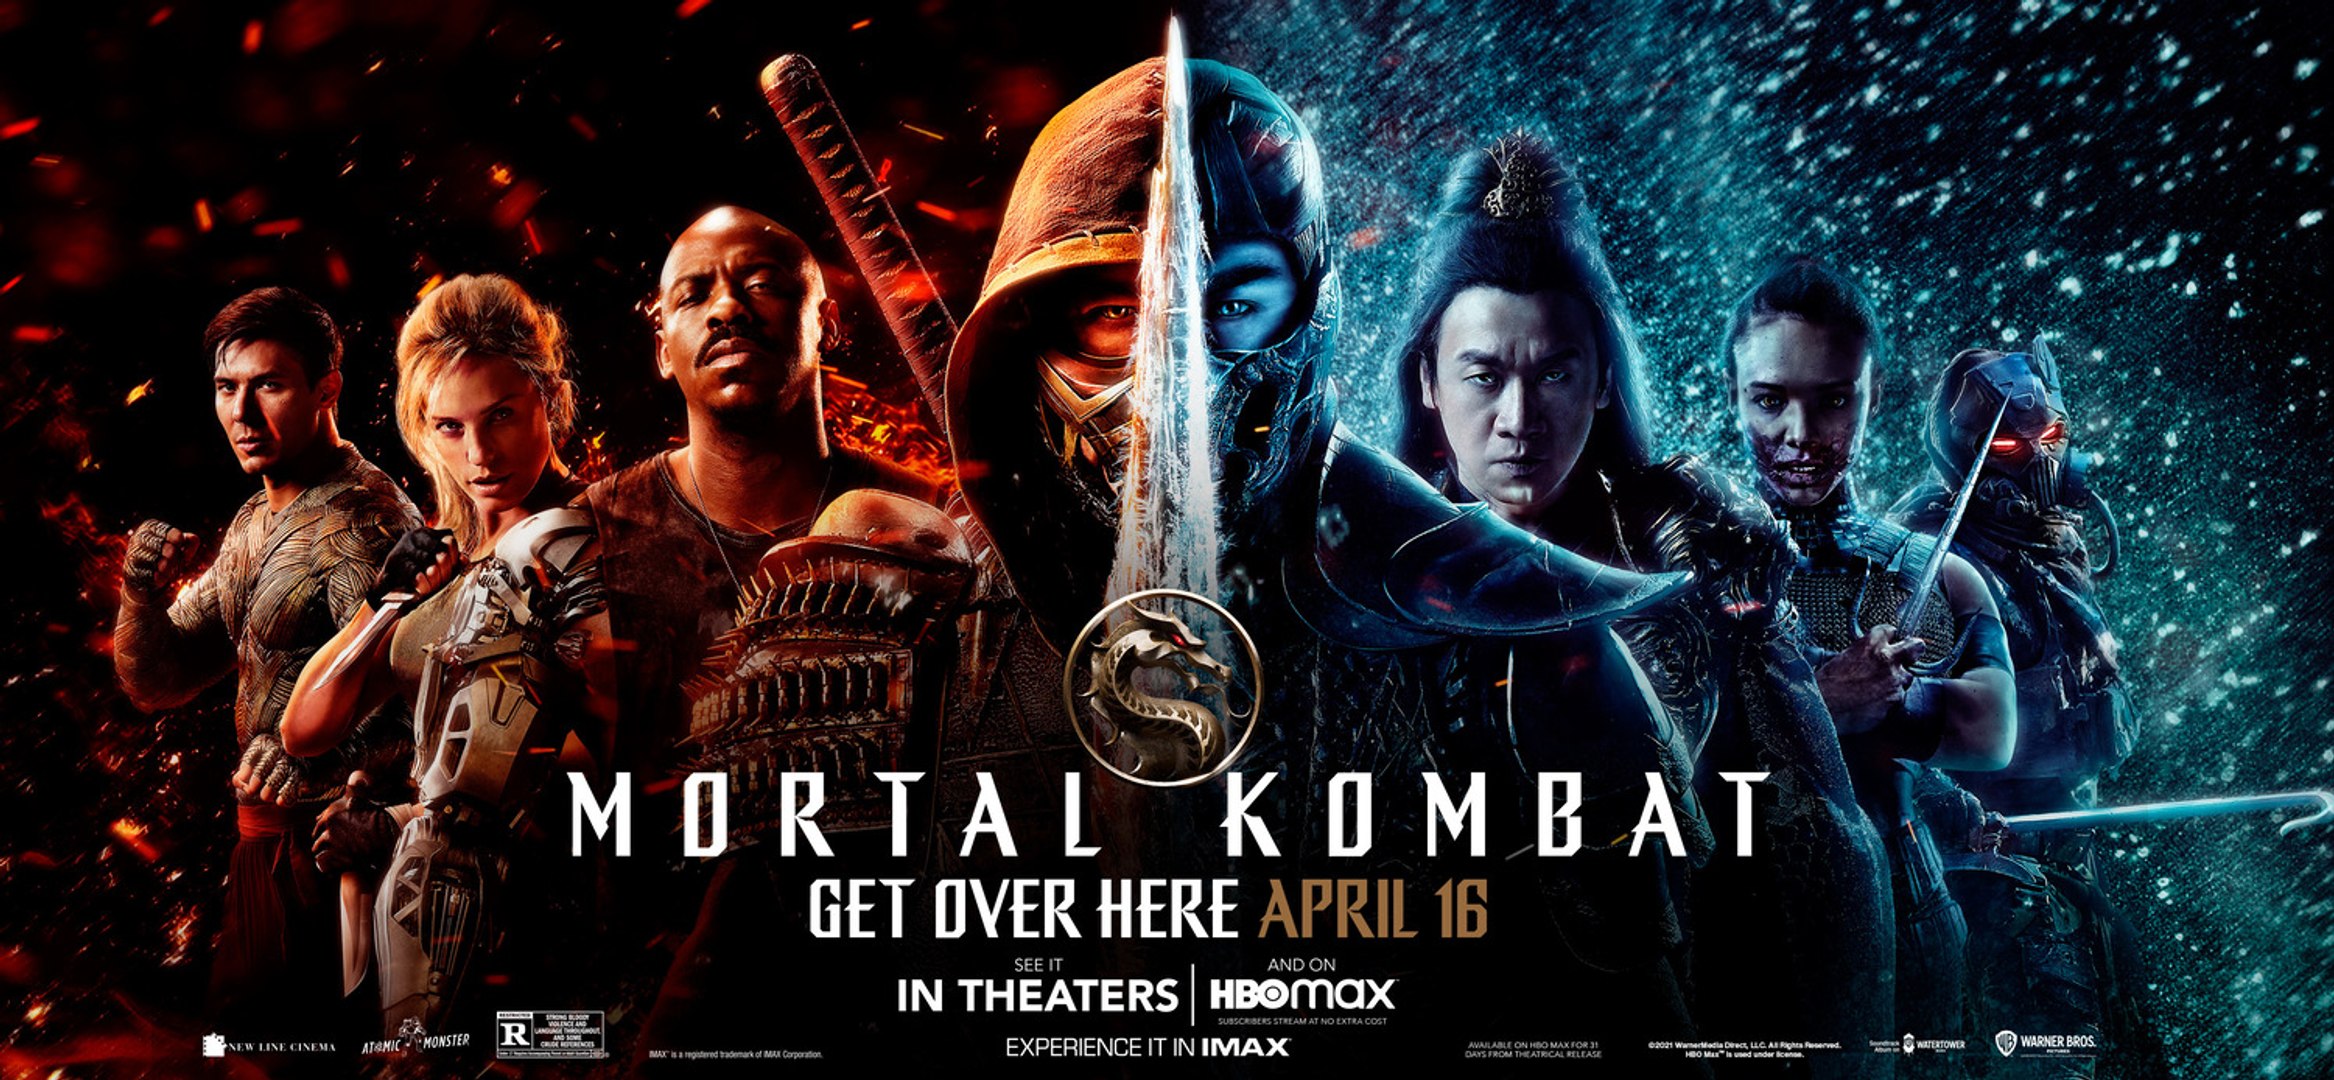 MORTAL KOMBAT Movie (2021) Trailer - Scorpion's Fight - video Dailymotion